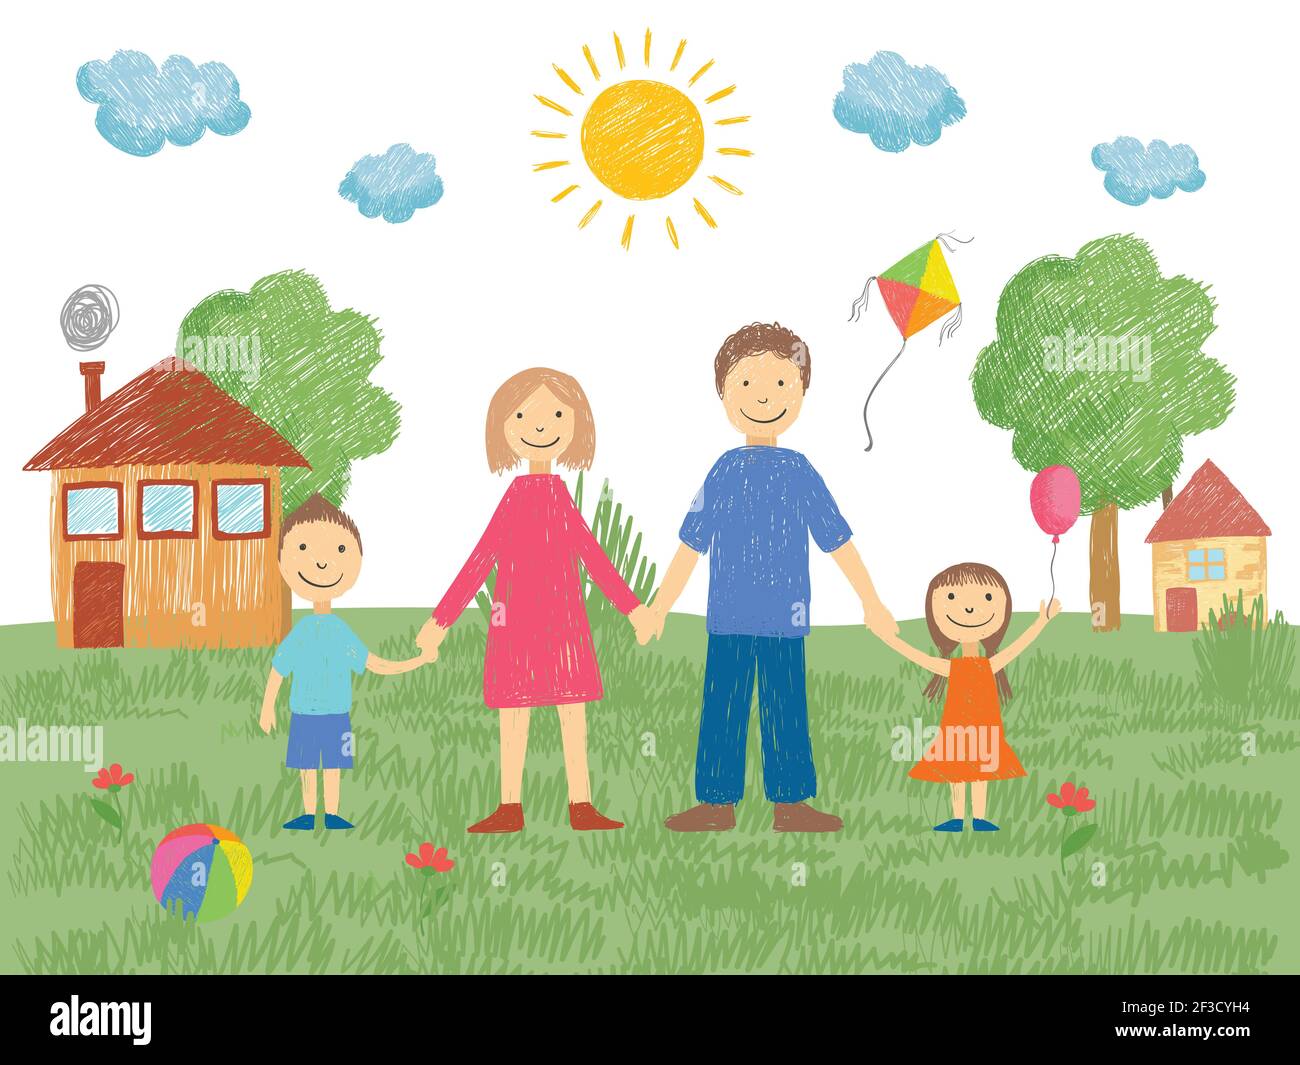 Large family - Stock Illustration [2228800] - PIXTA